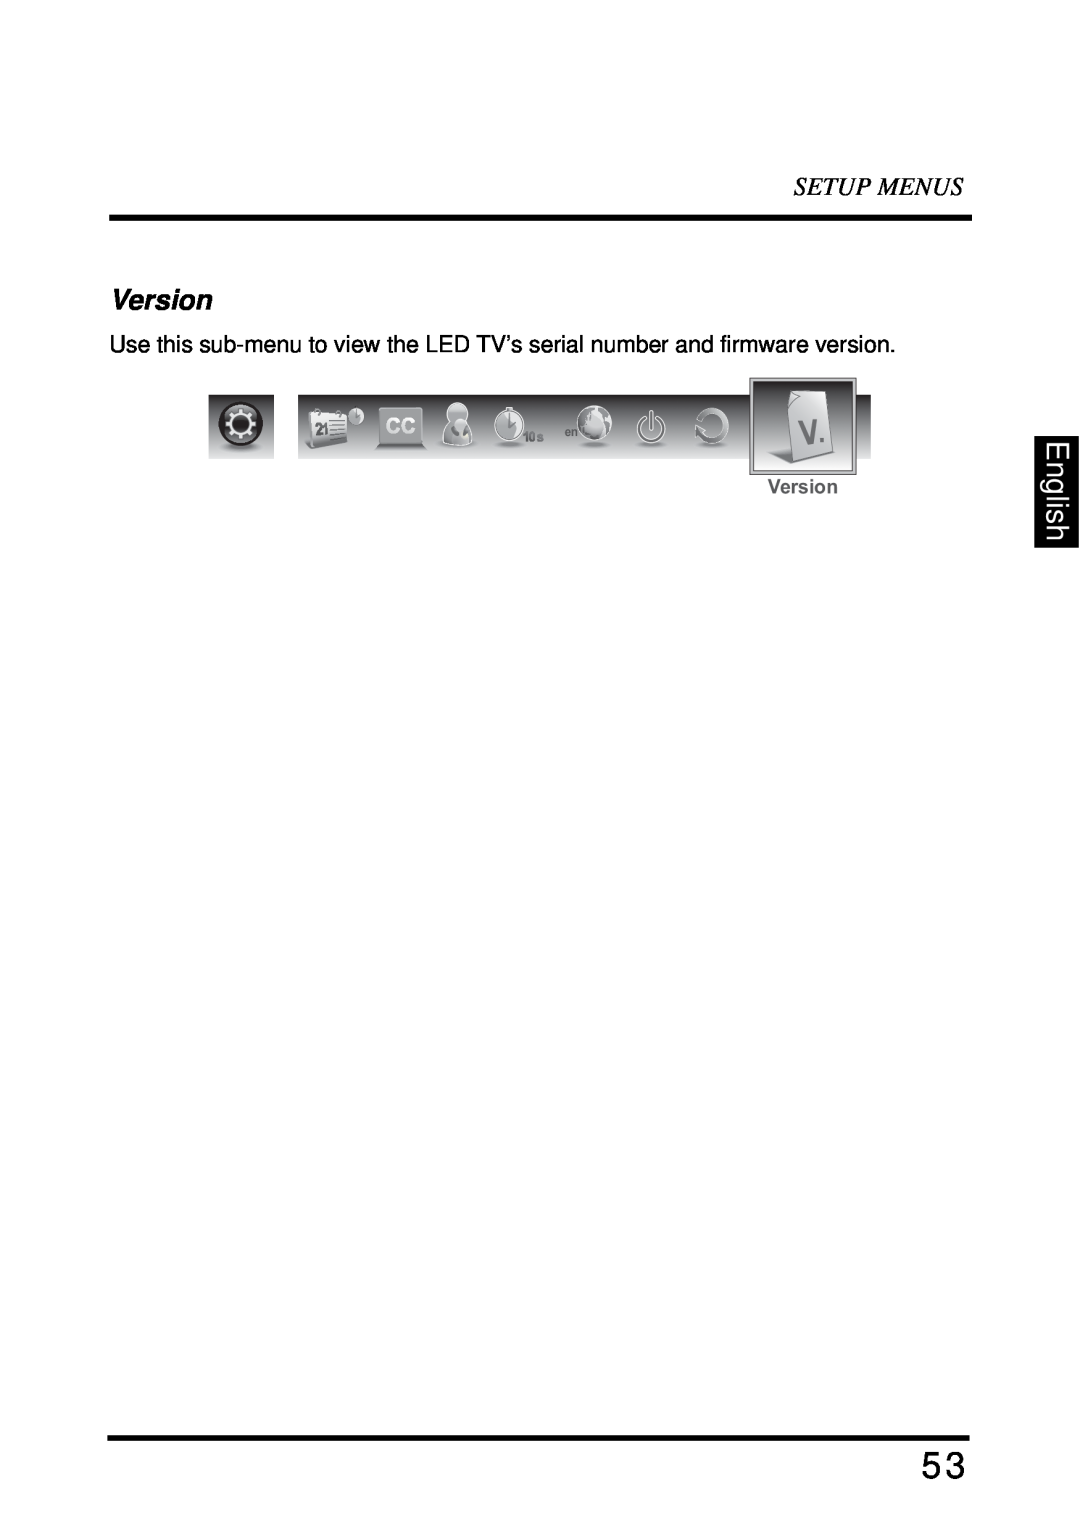 Westinghouse LD-4680 user manual Version, English, Setup Menus 